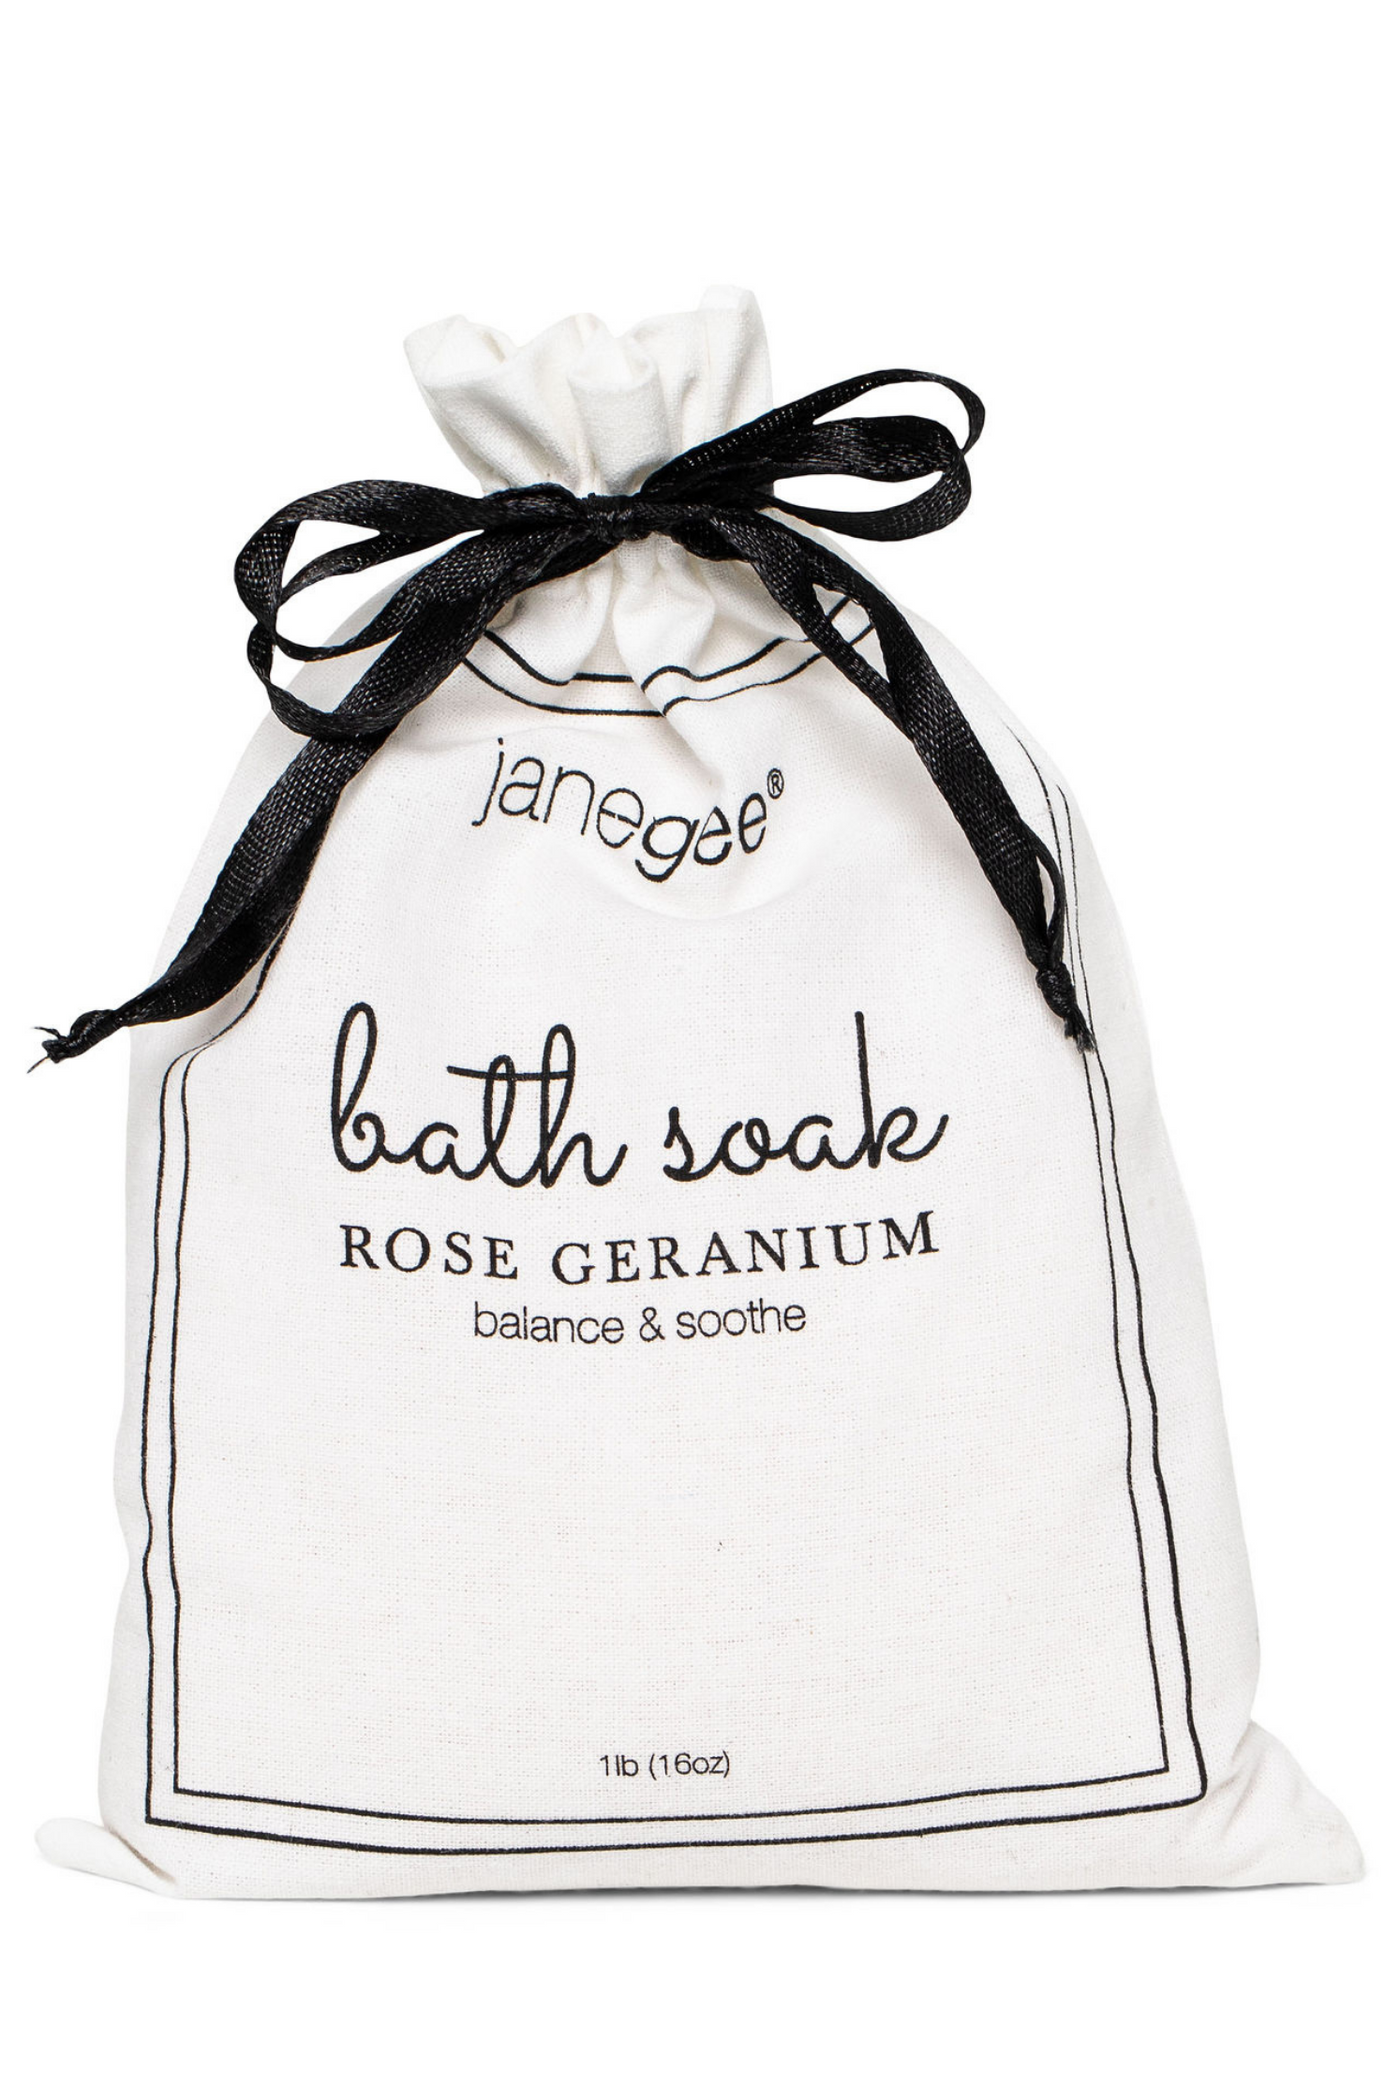 janegee Rose Geranium Bath Soak